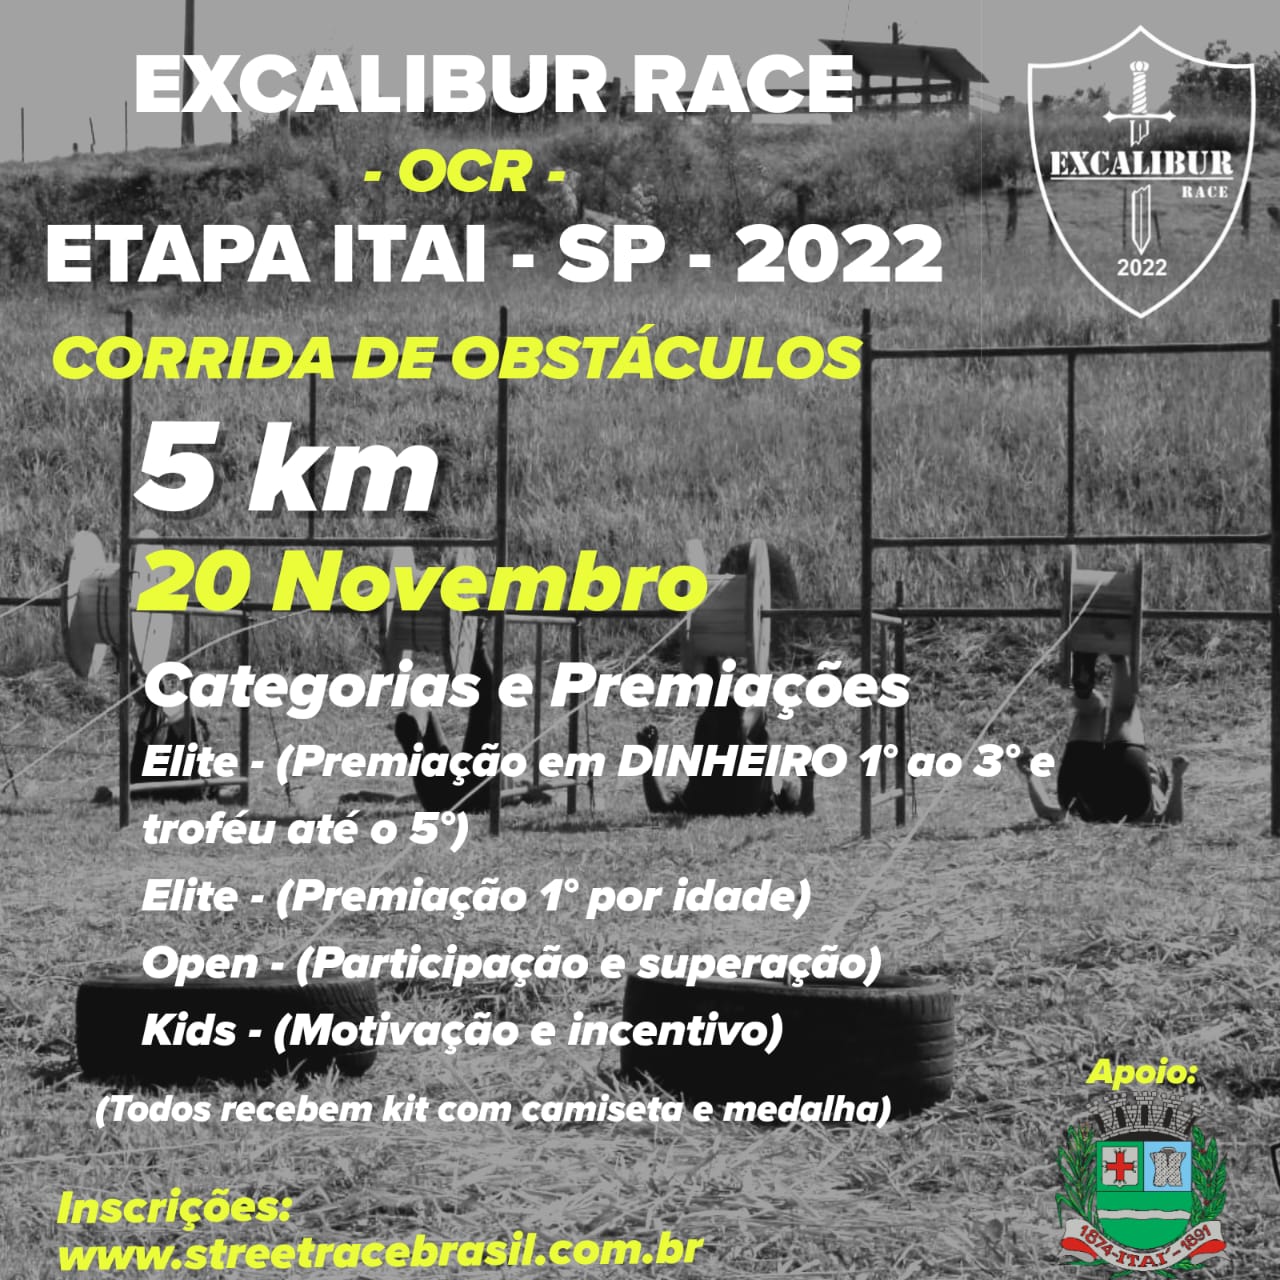 EXCALIBUR RACE – OCR - ETAPA ITAÍ-SP 2022